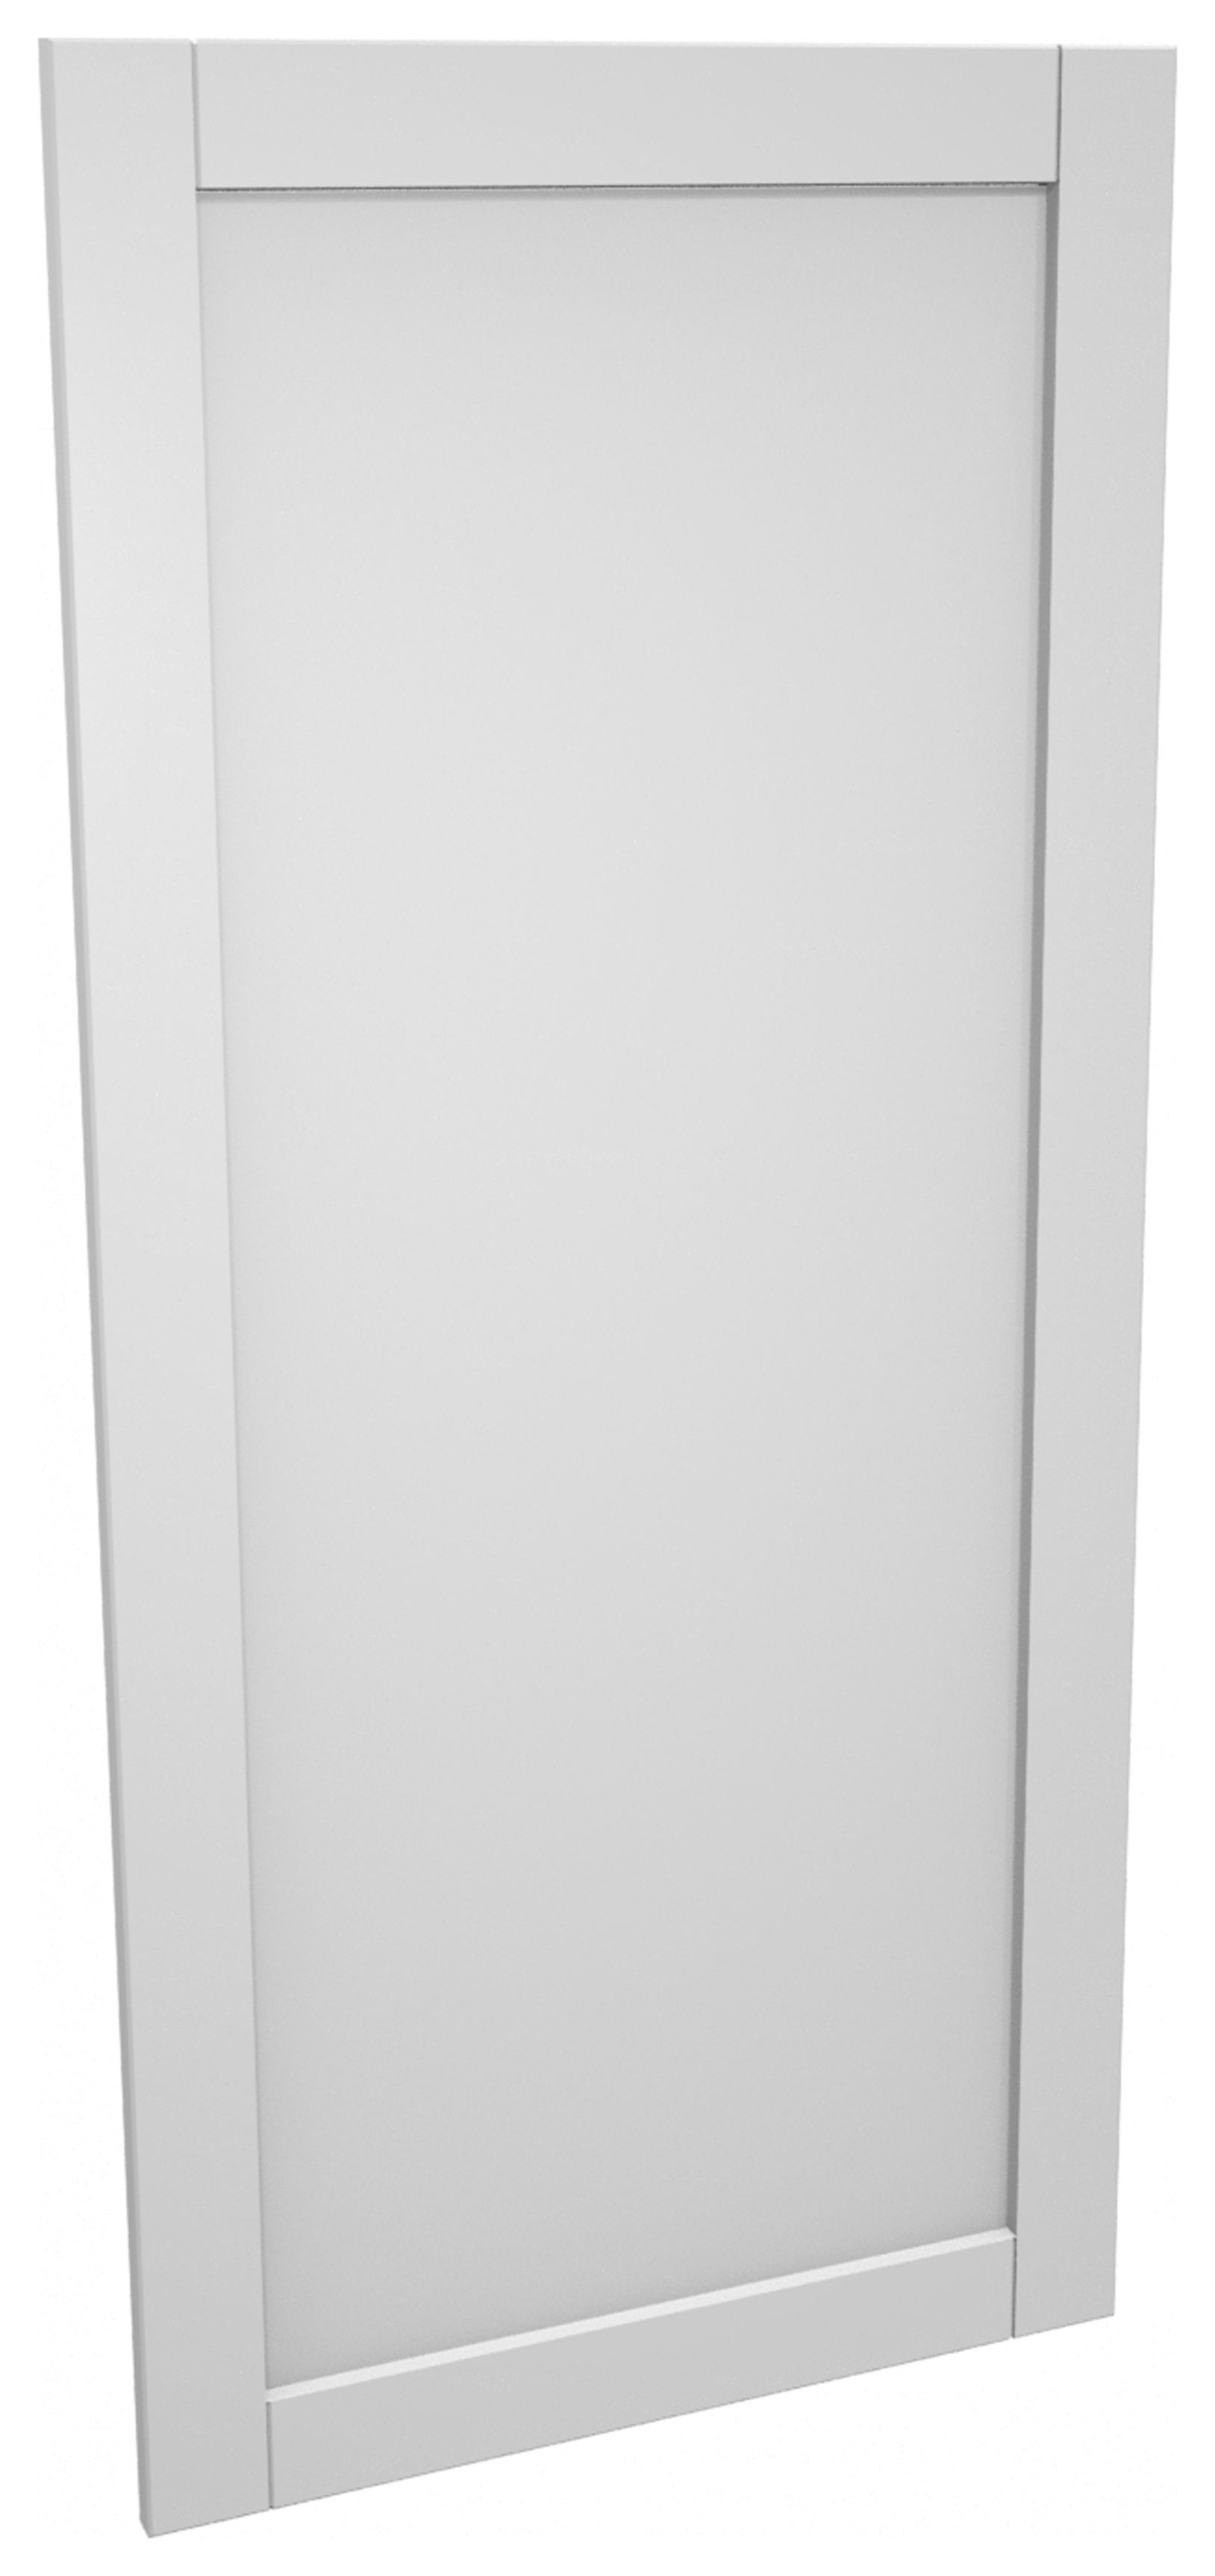 Image of Wickes Ohio Grey Shaker Appliance Door (A) - 600 x 1319mm